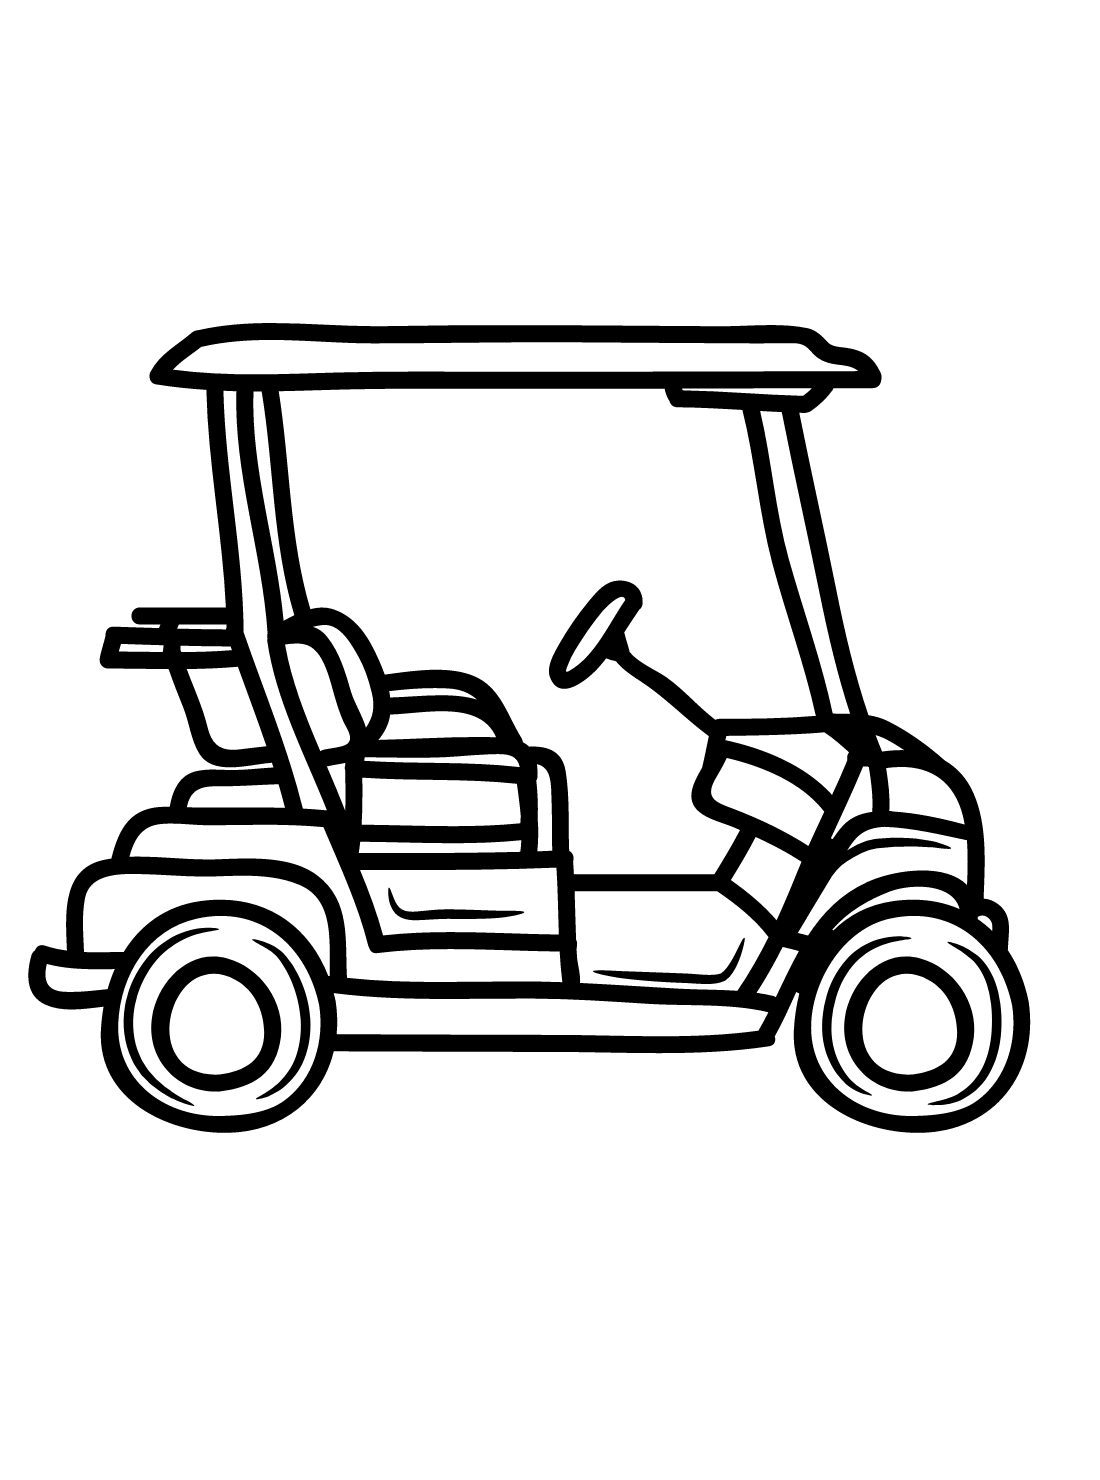 Golf Cart Printable - Coloring Online Free